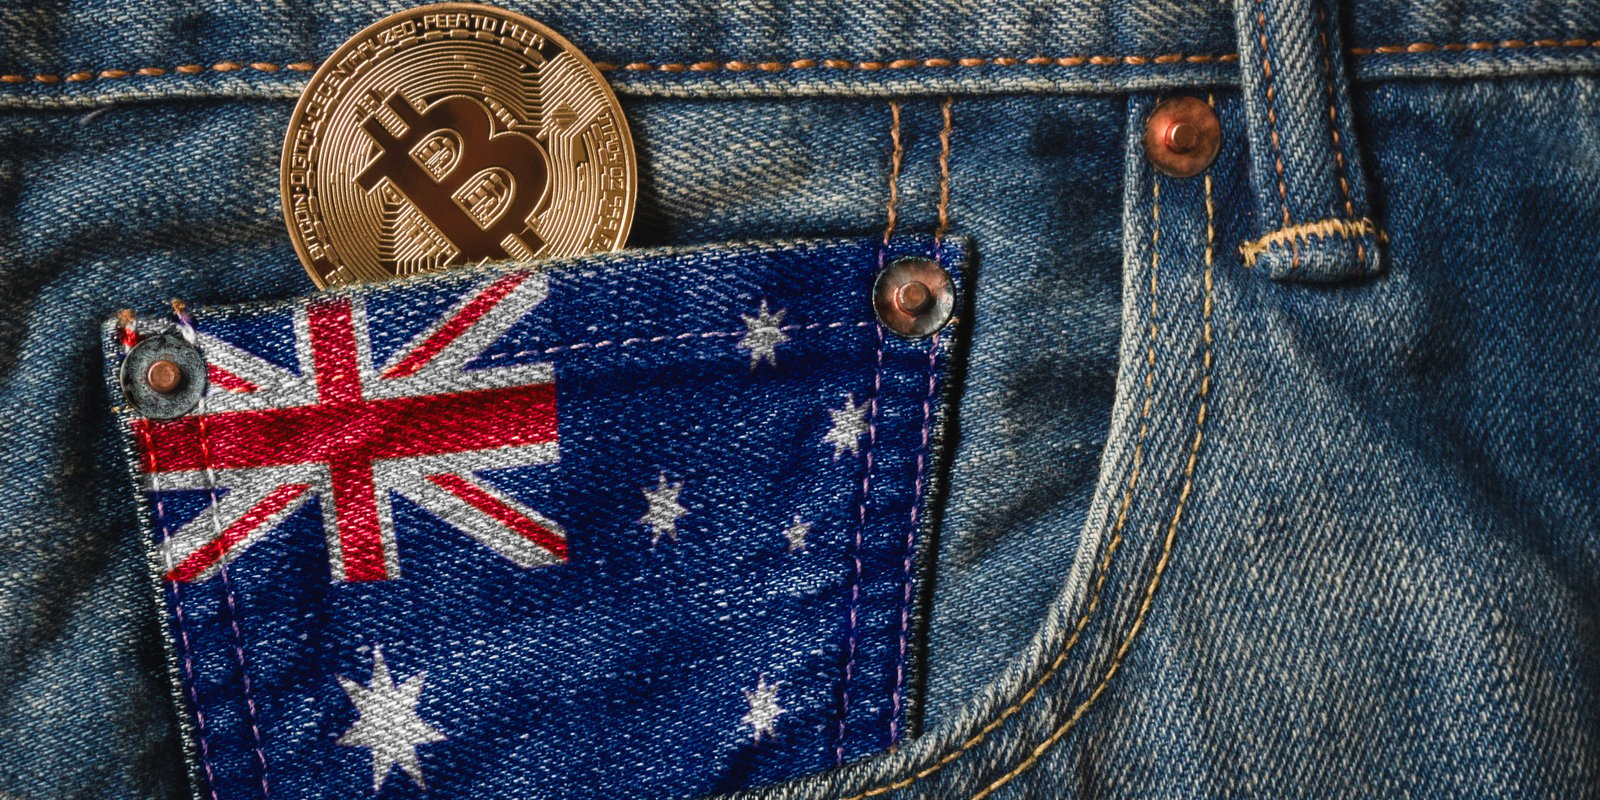 Aussie Banks Still Cold to Cryptocurrency Businesses Despite Regulation